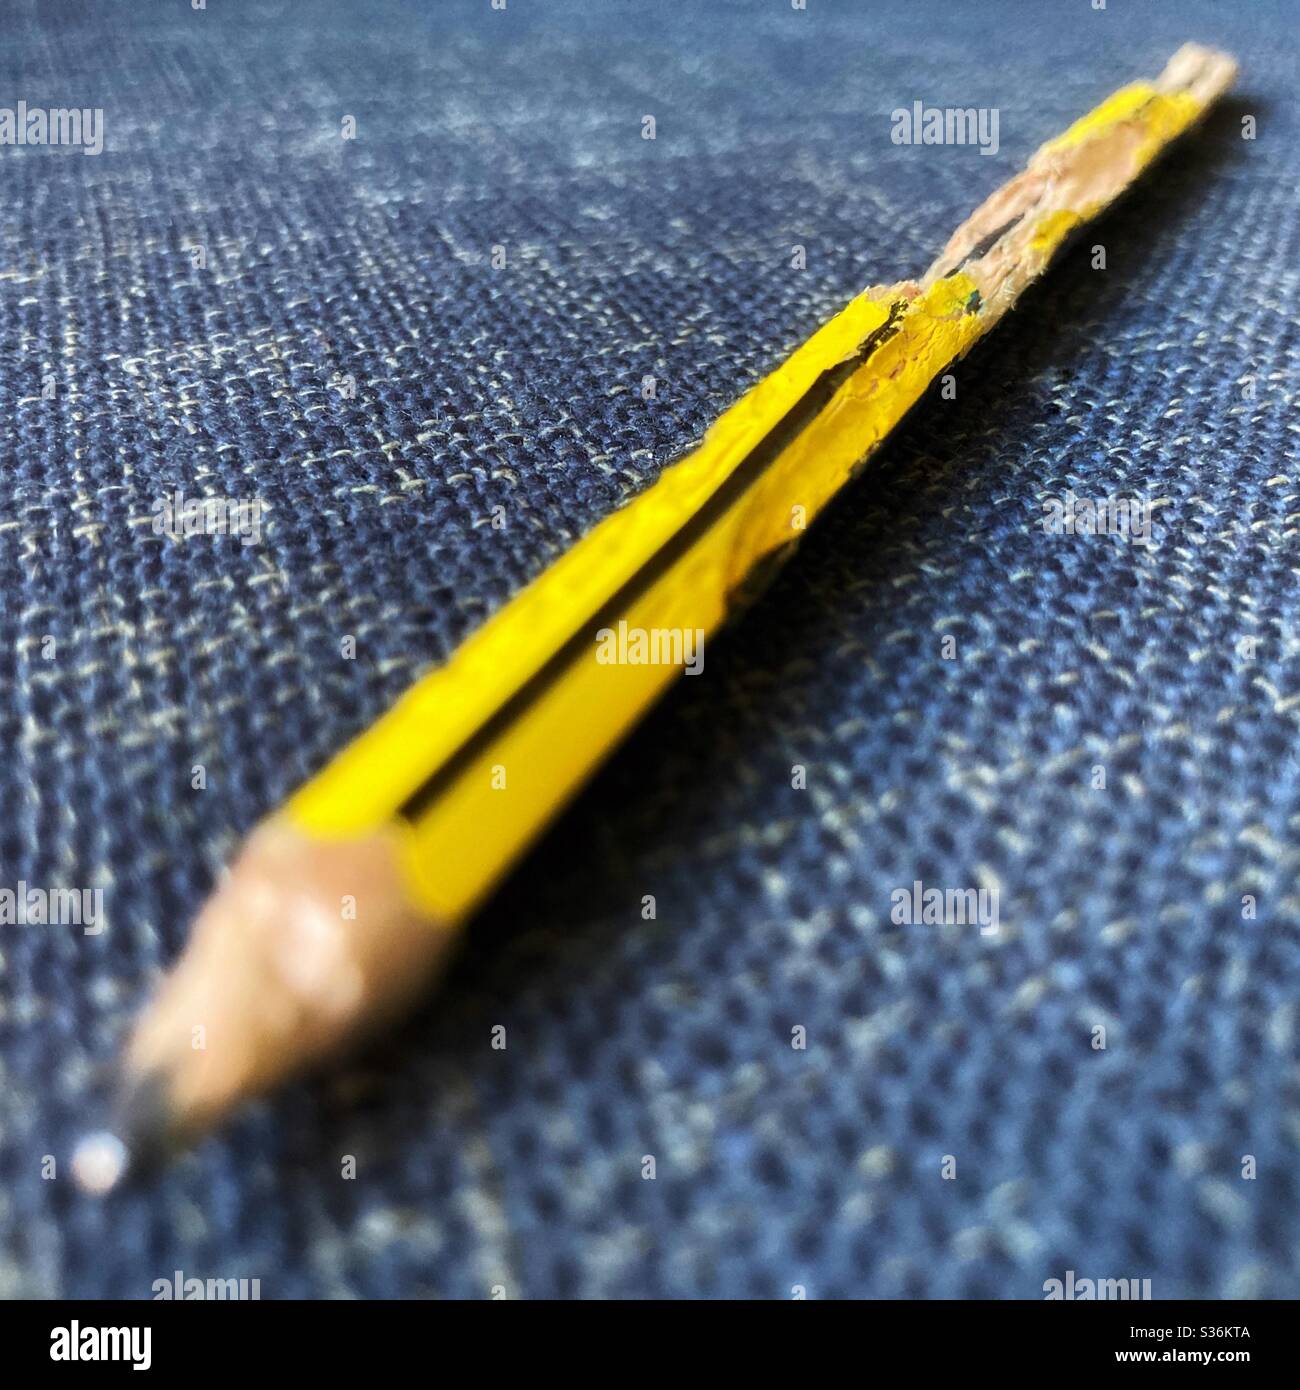 Biting pencil Stock Photo